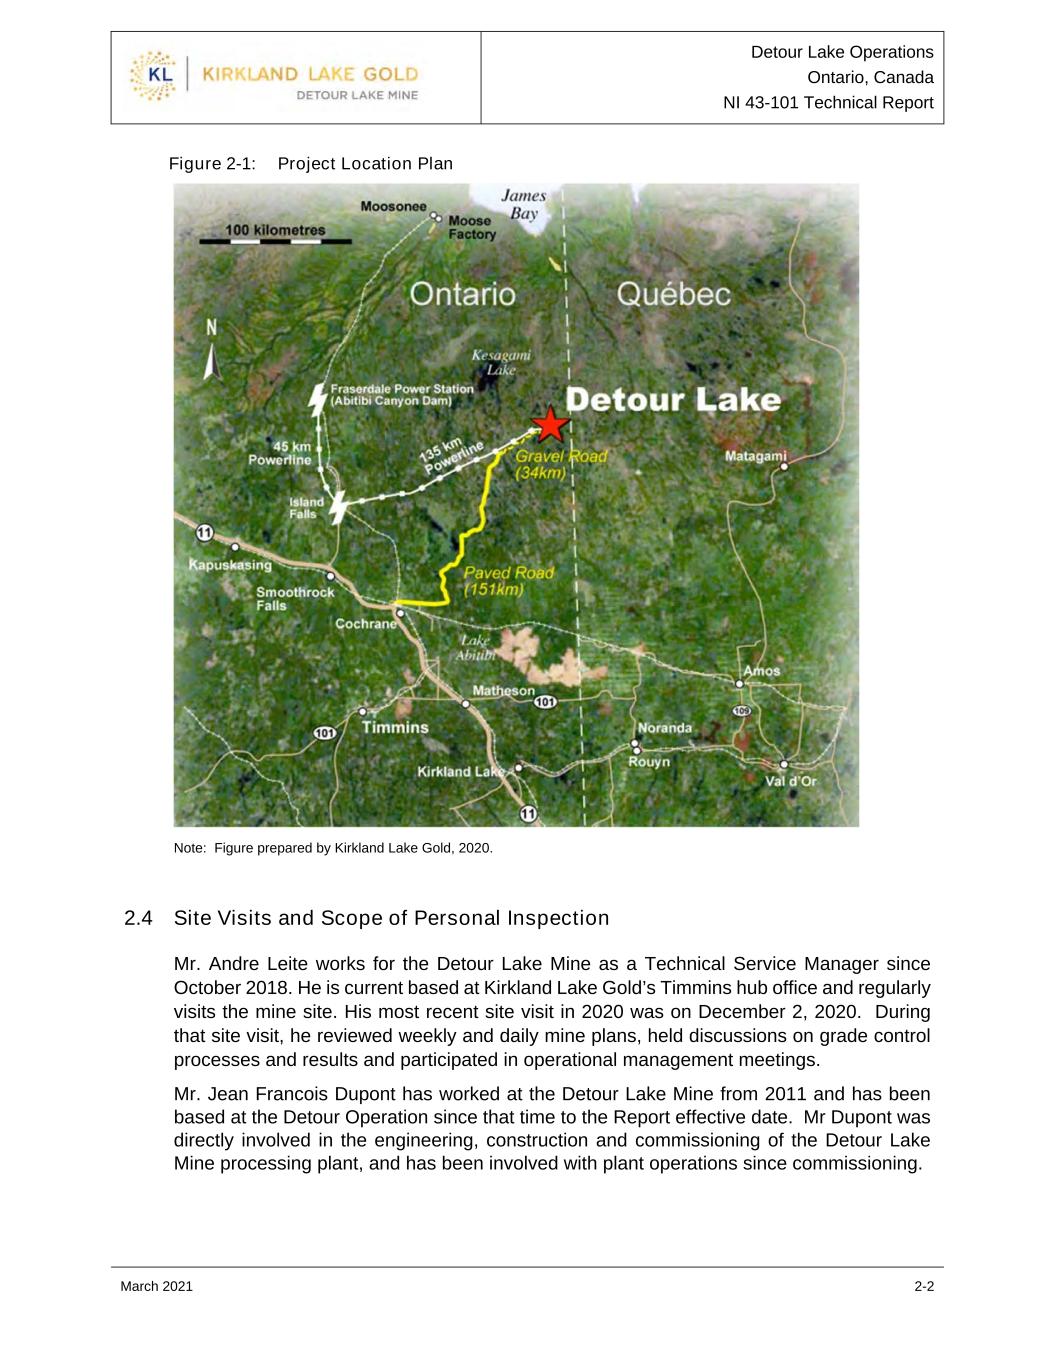 Kirkland Lake Gold Ltd. - Detour Lake Operation Ontario, Canada NI 